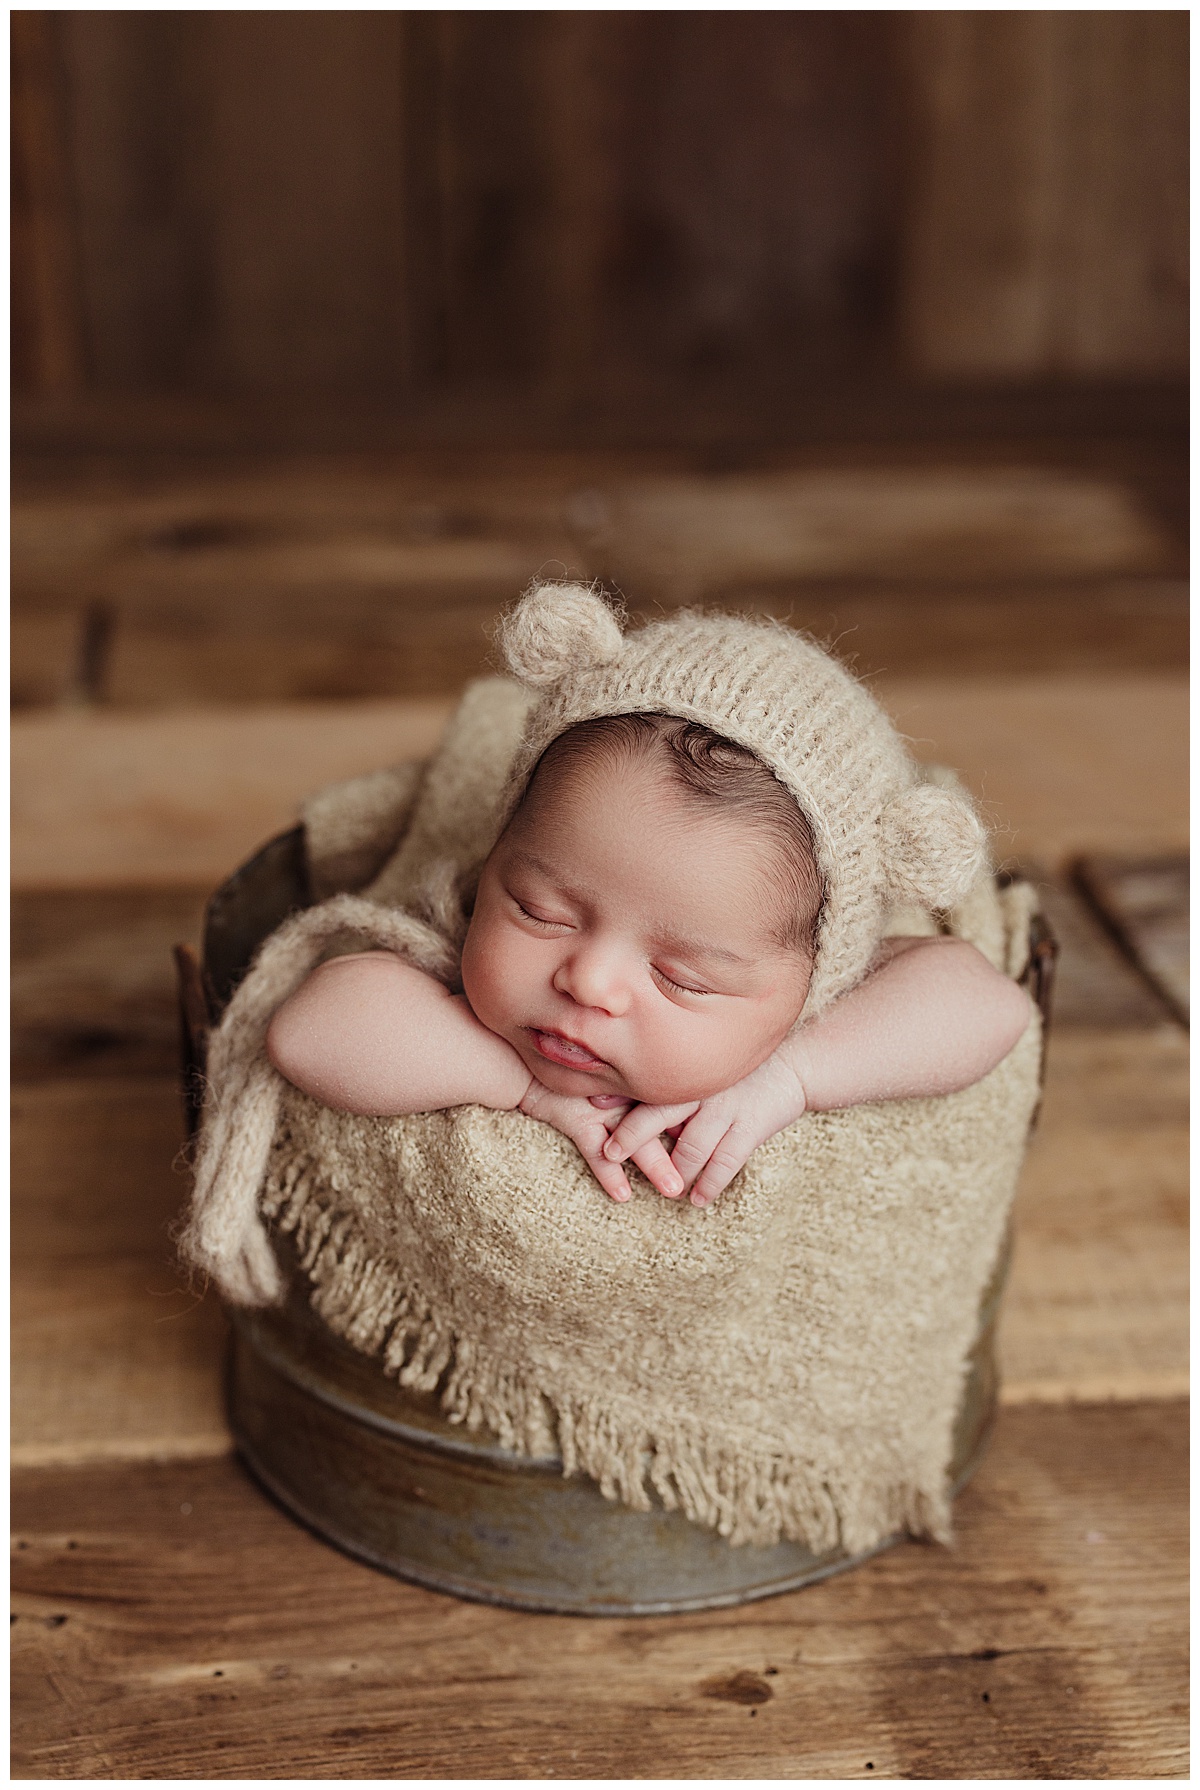 Baby sleeps in little basket for Norma Fayak Photography